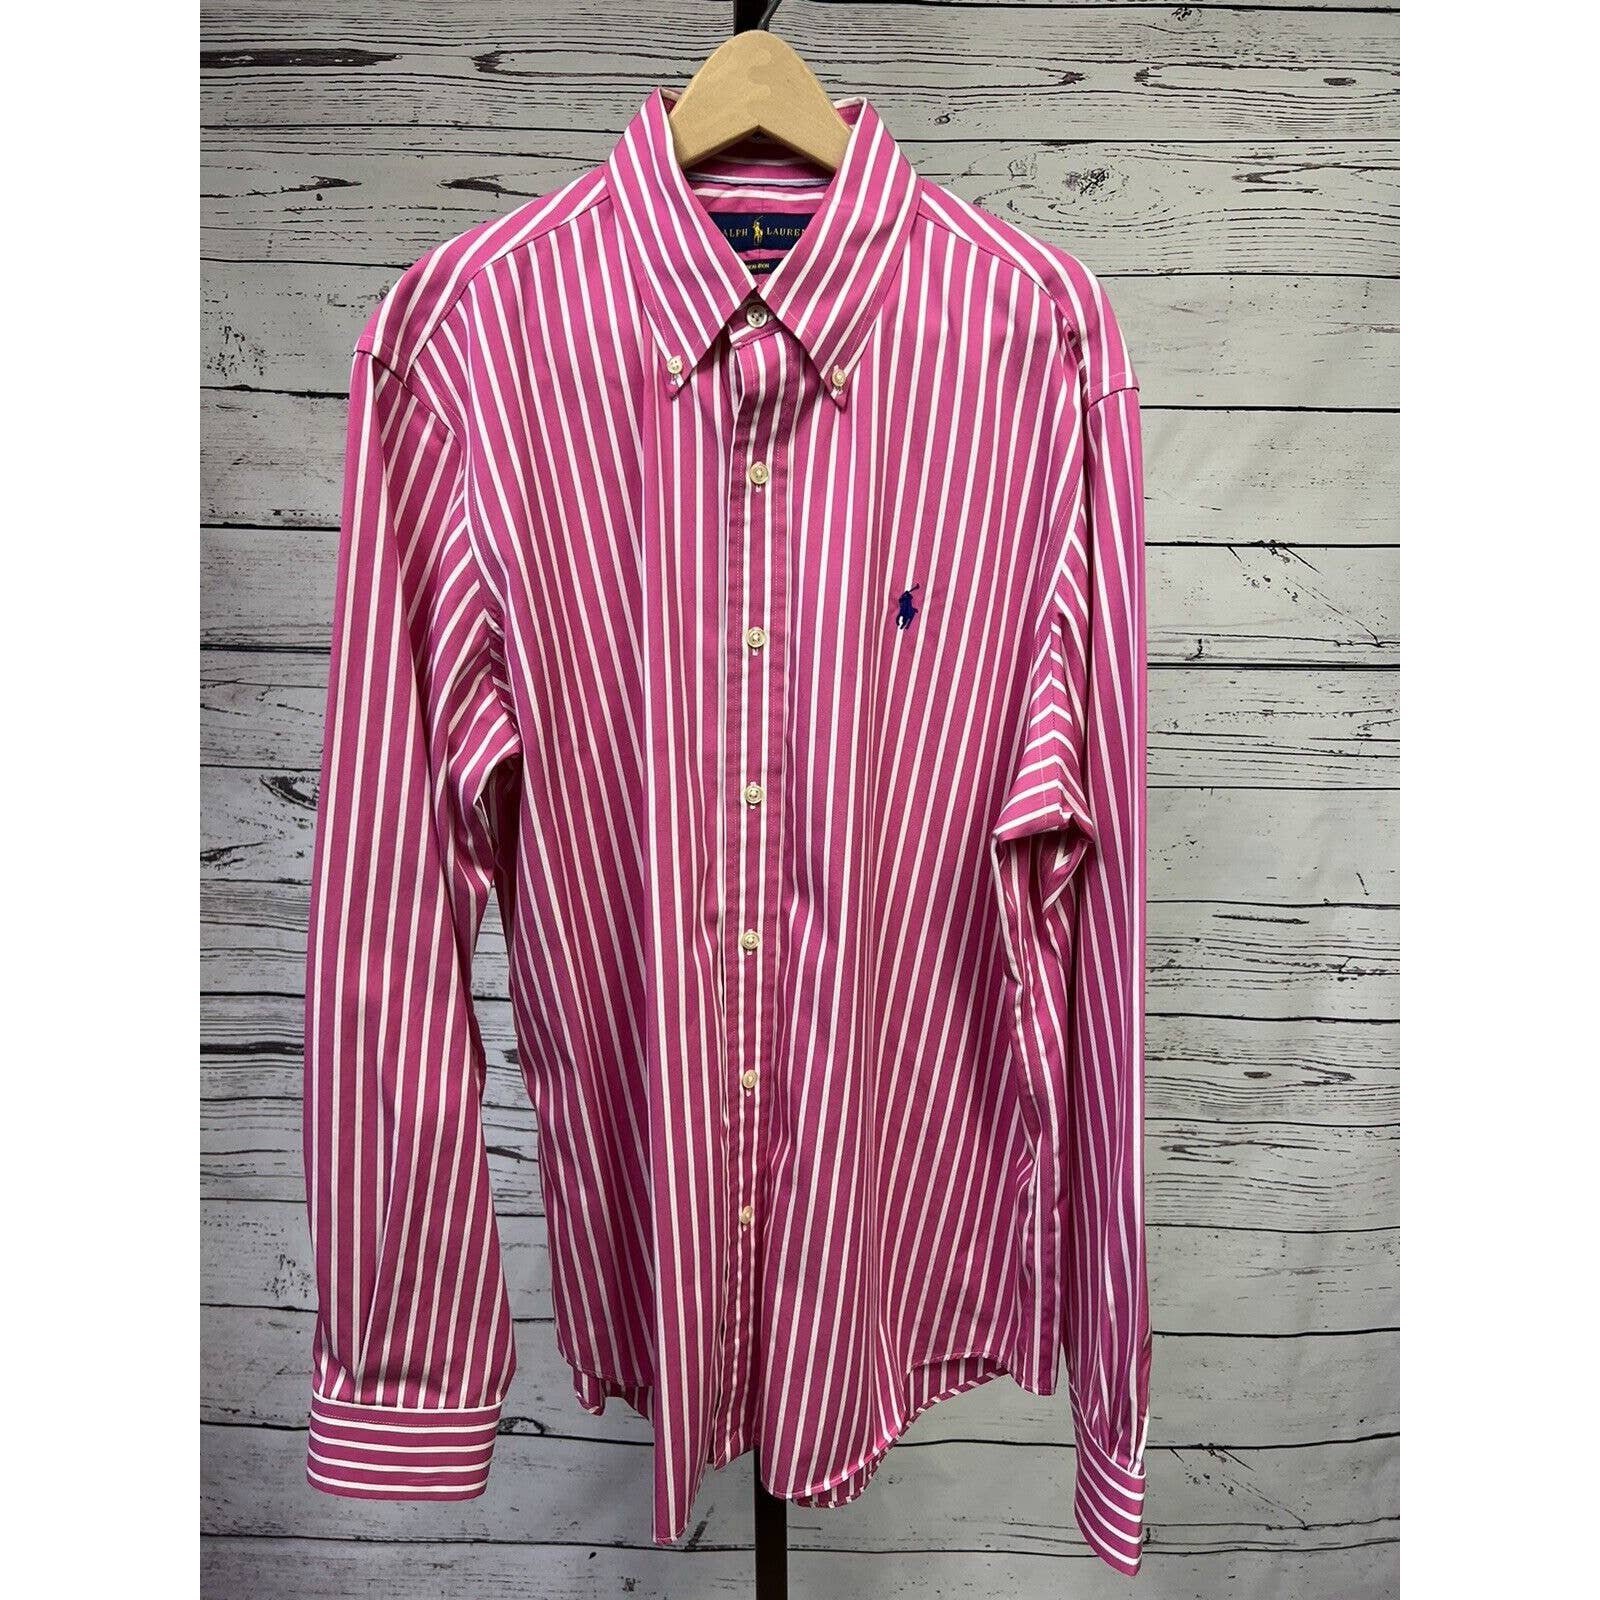 Ralph Lauren Classic Fit Button Down Shirts Men’s Large Pinstripe Lot Of 3